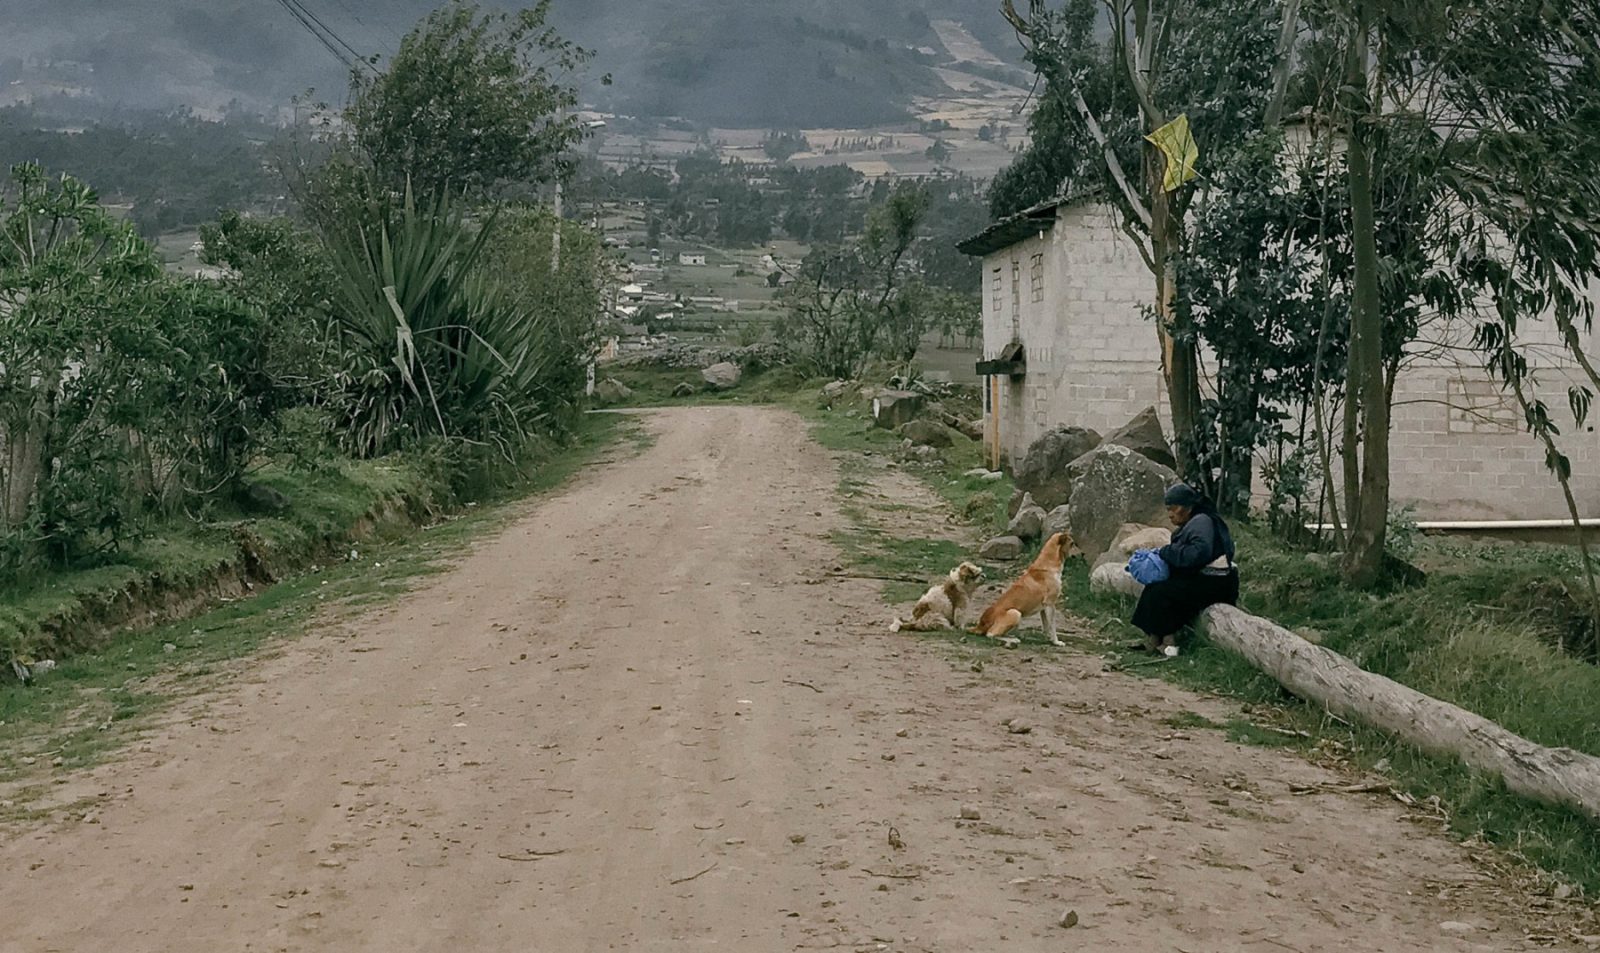 On the way to El Lechero in Otavalo